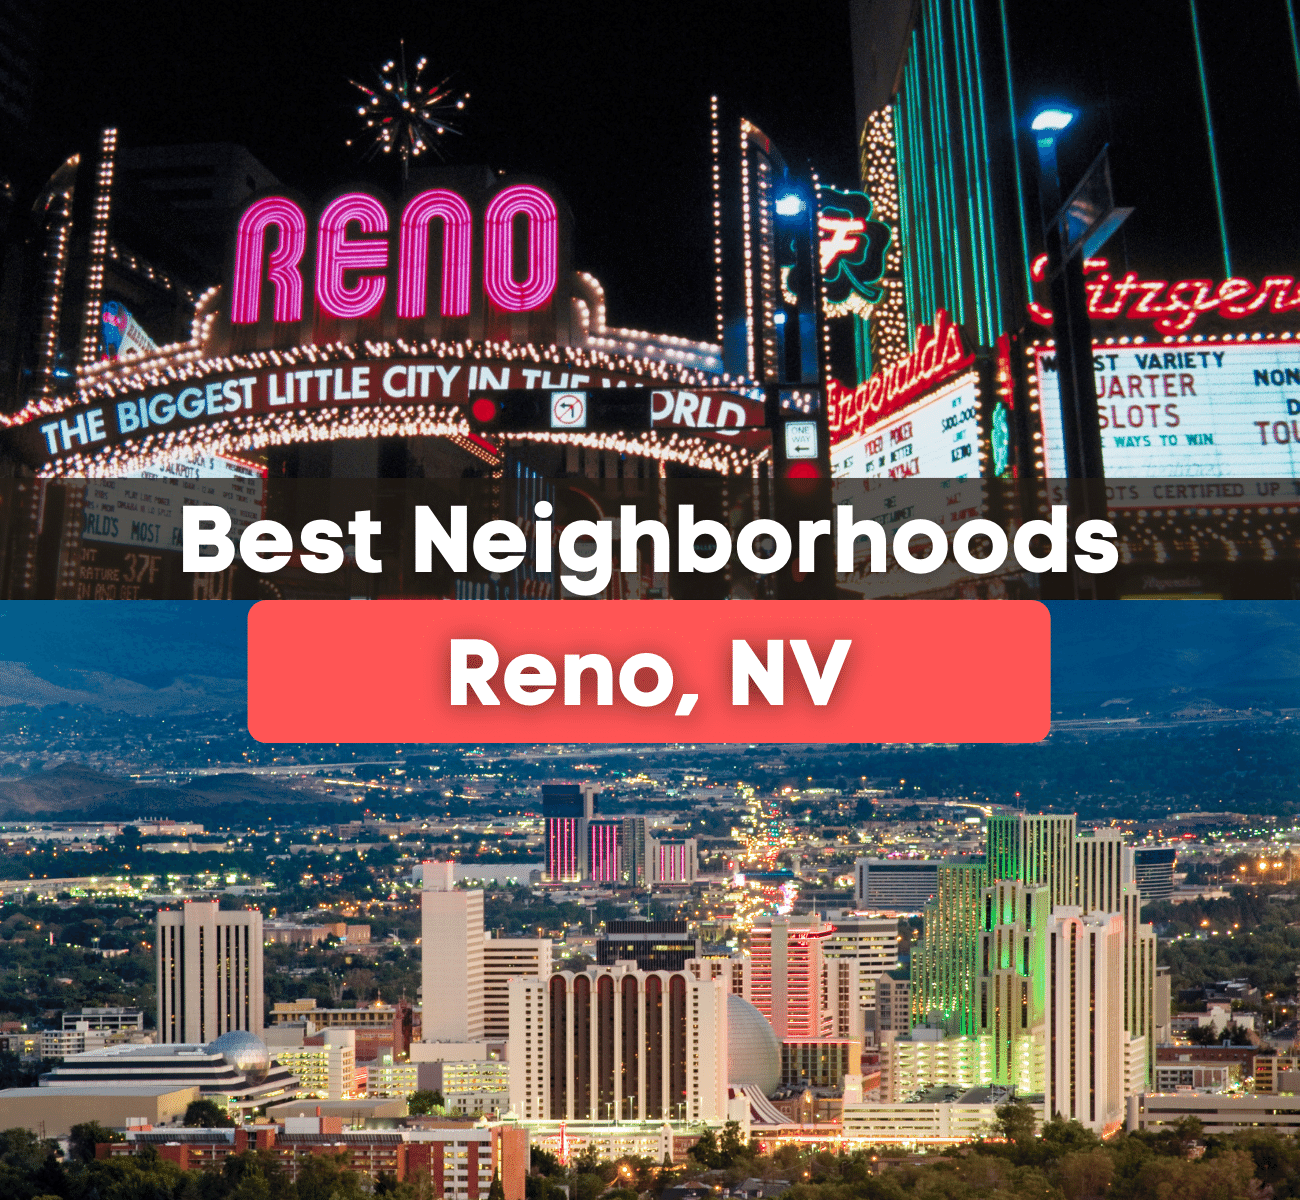 Reno, Nevada at night with bright lights